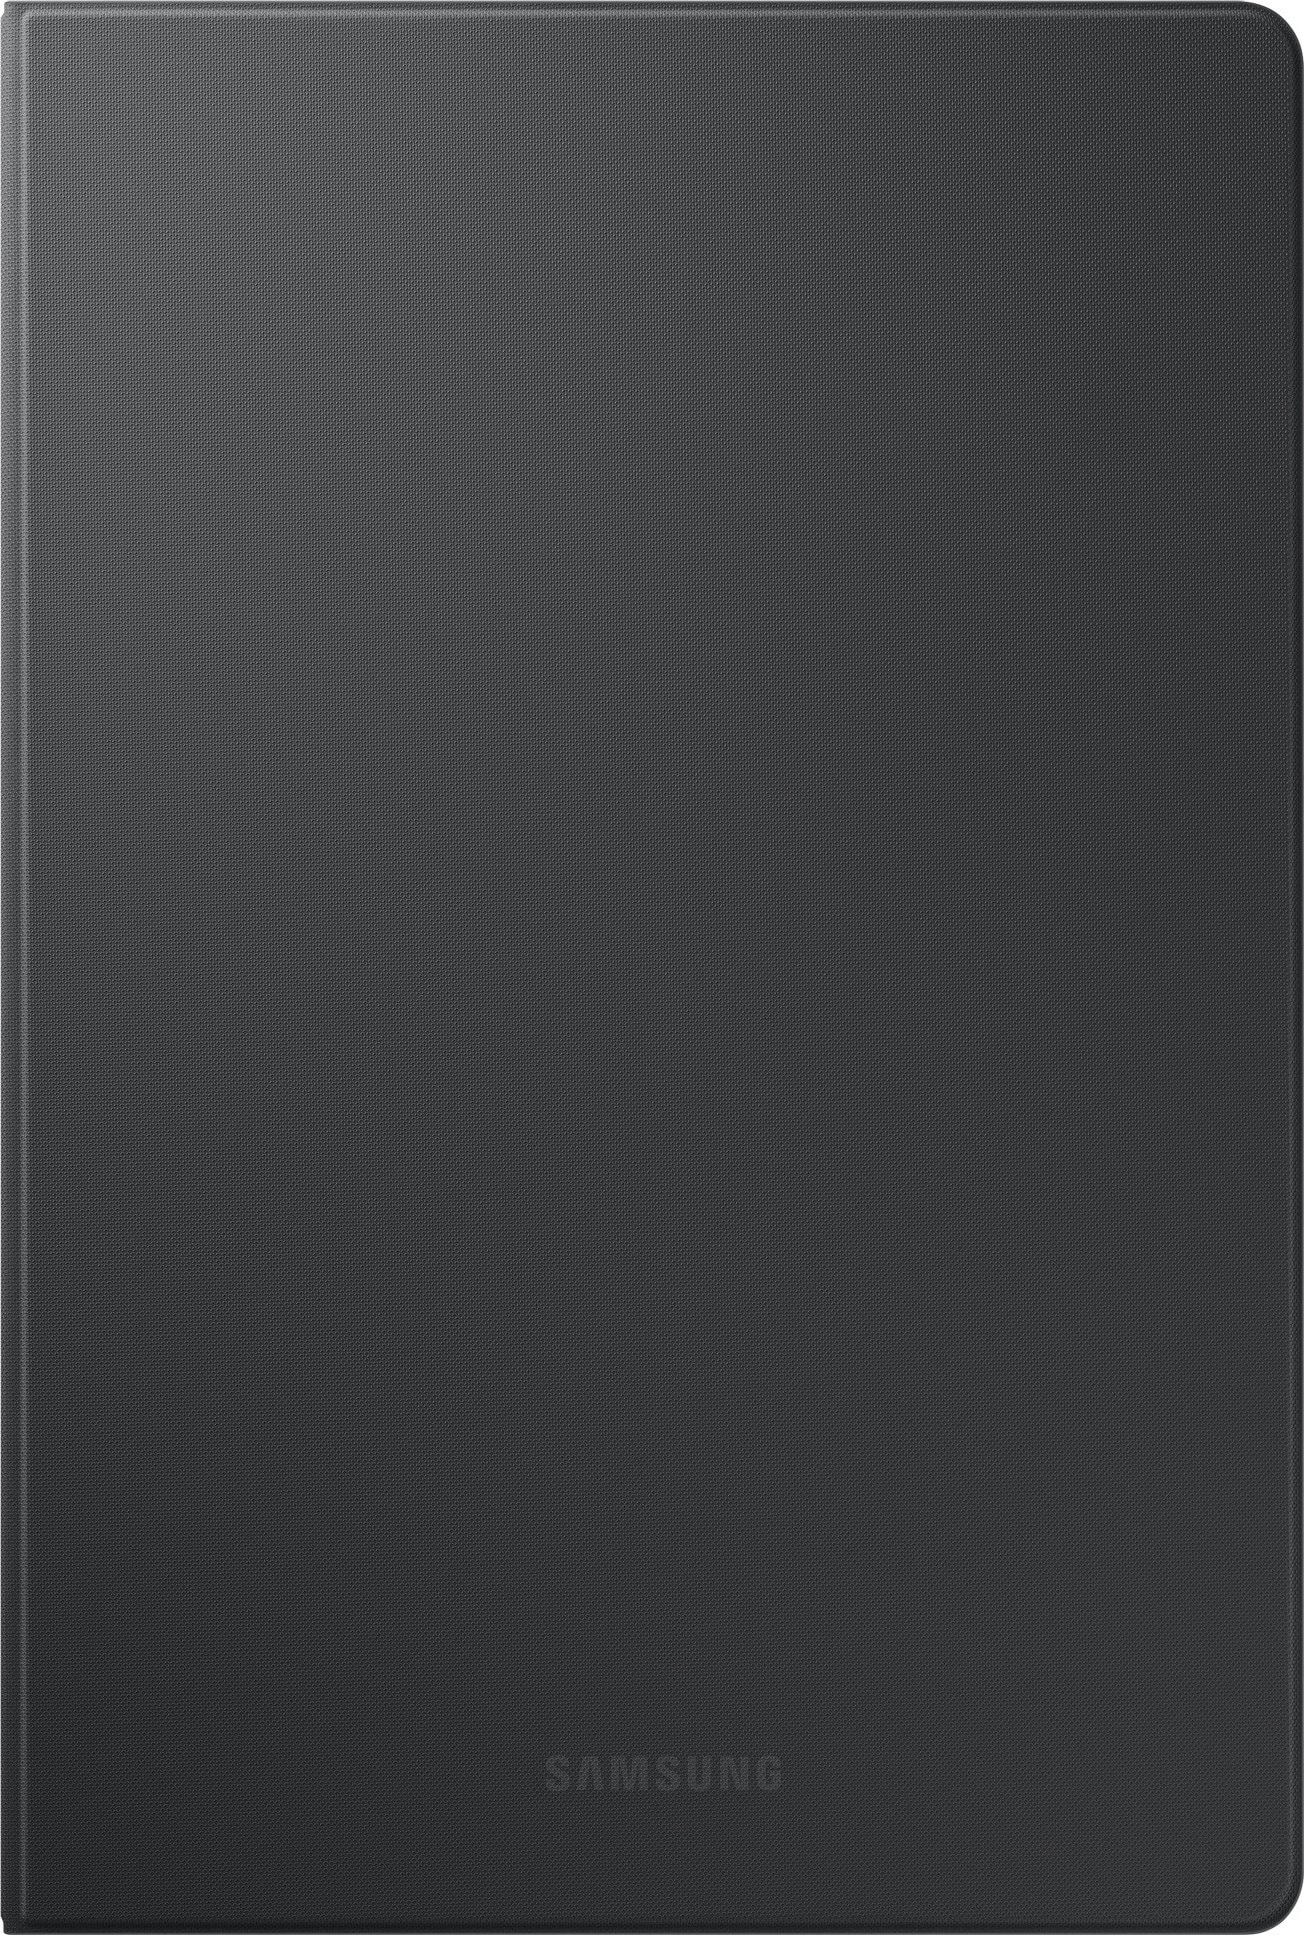 Samsung Galaxy Tab S6 Lite etui (oxford grey) - iPad og tablet tilbehør -  Elgiganten